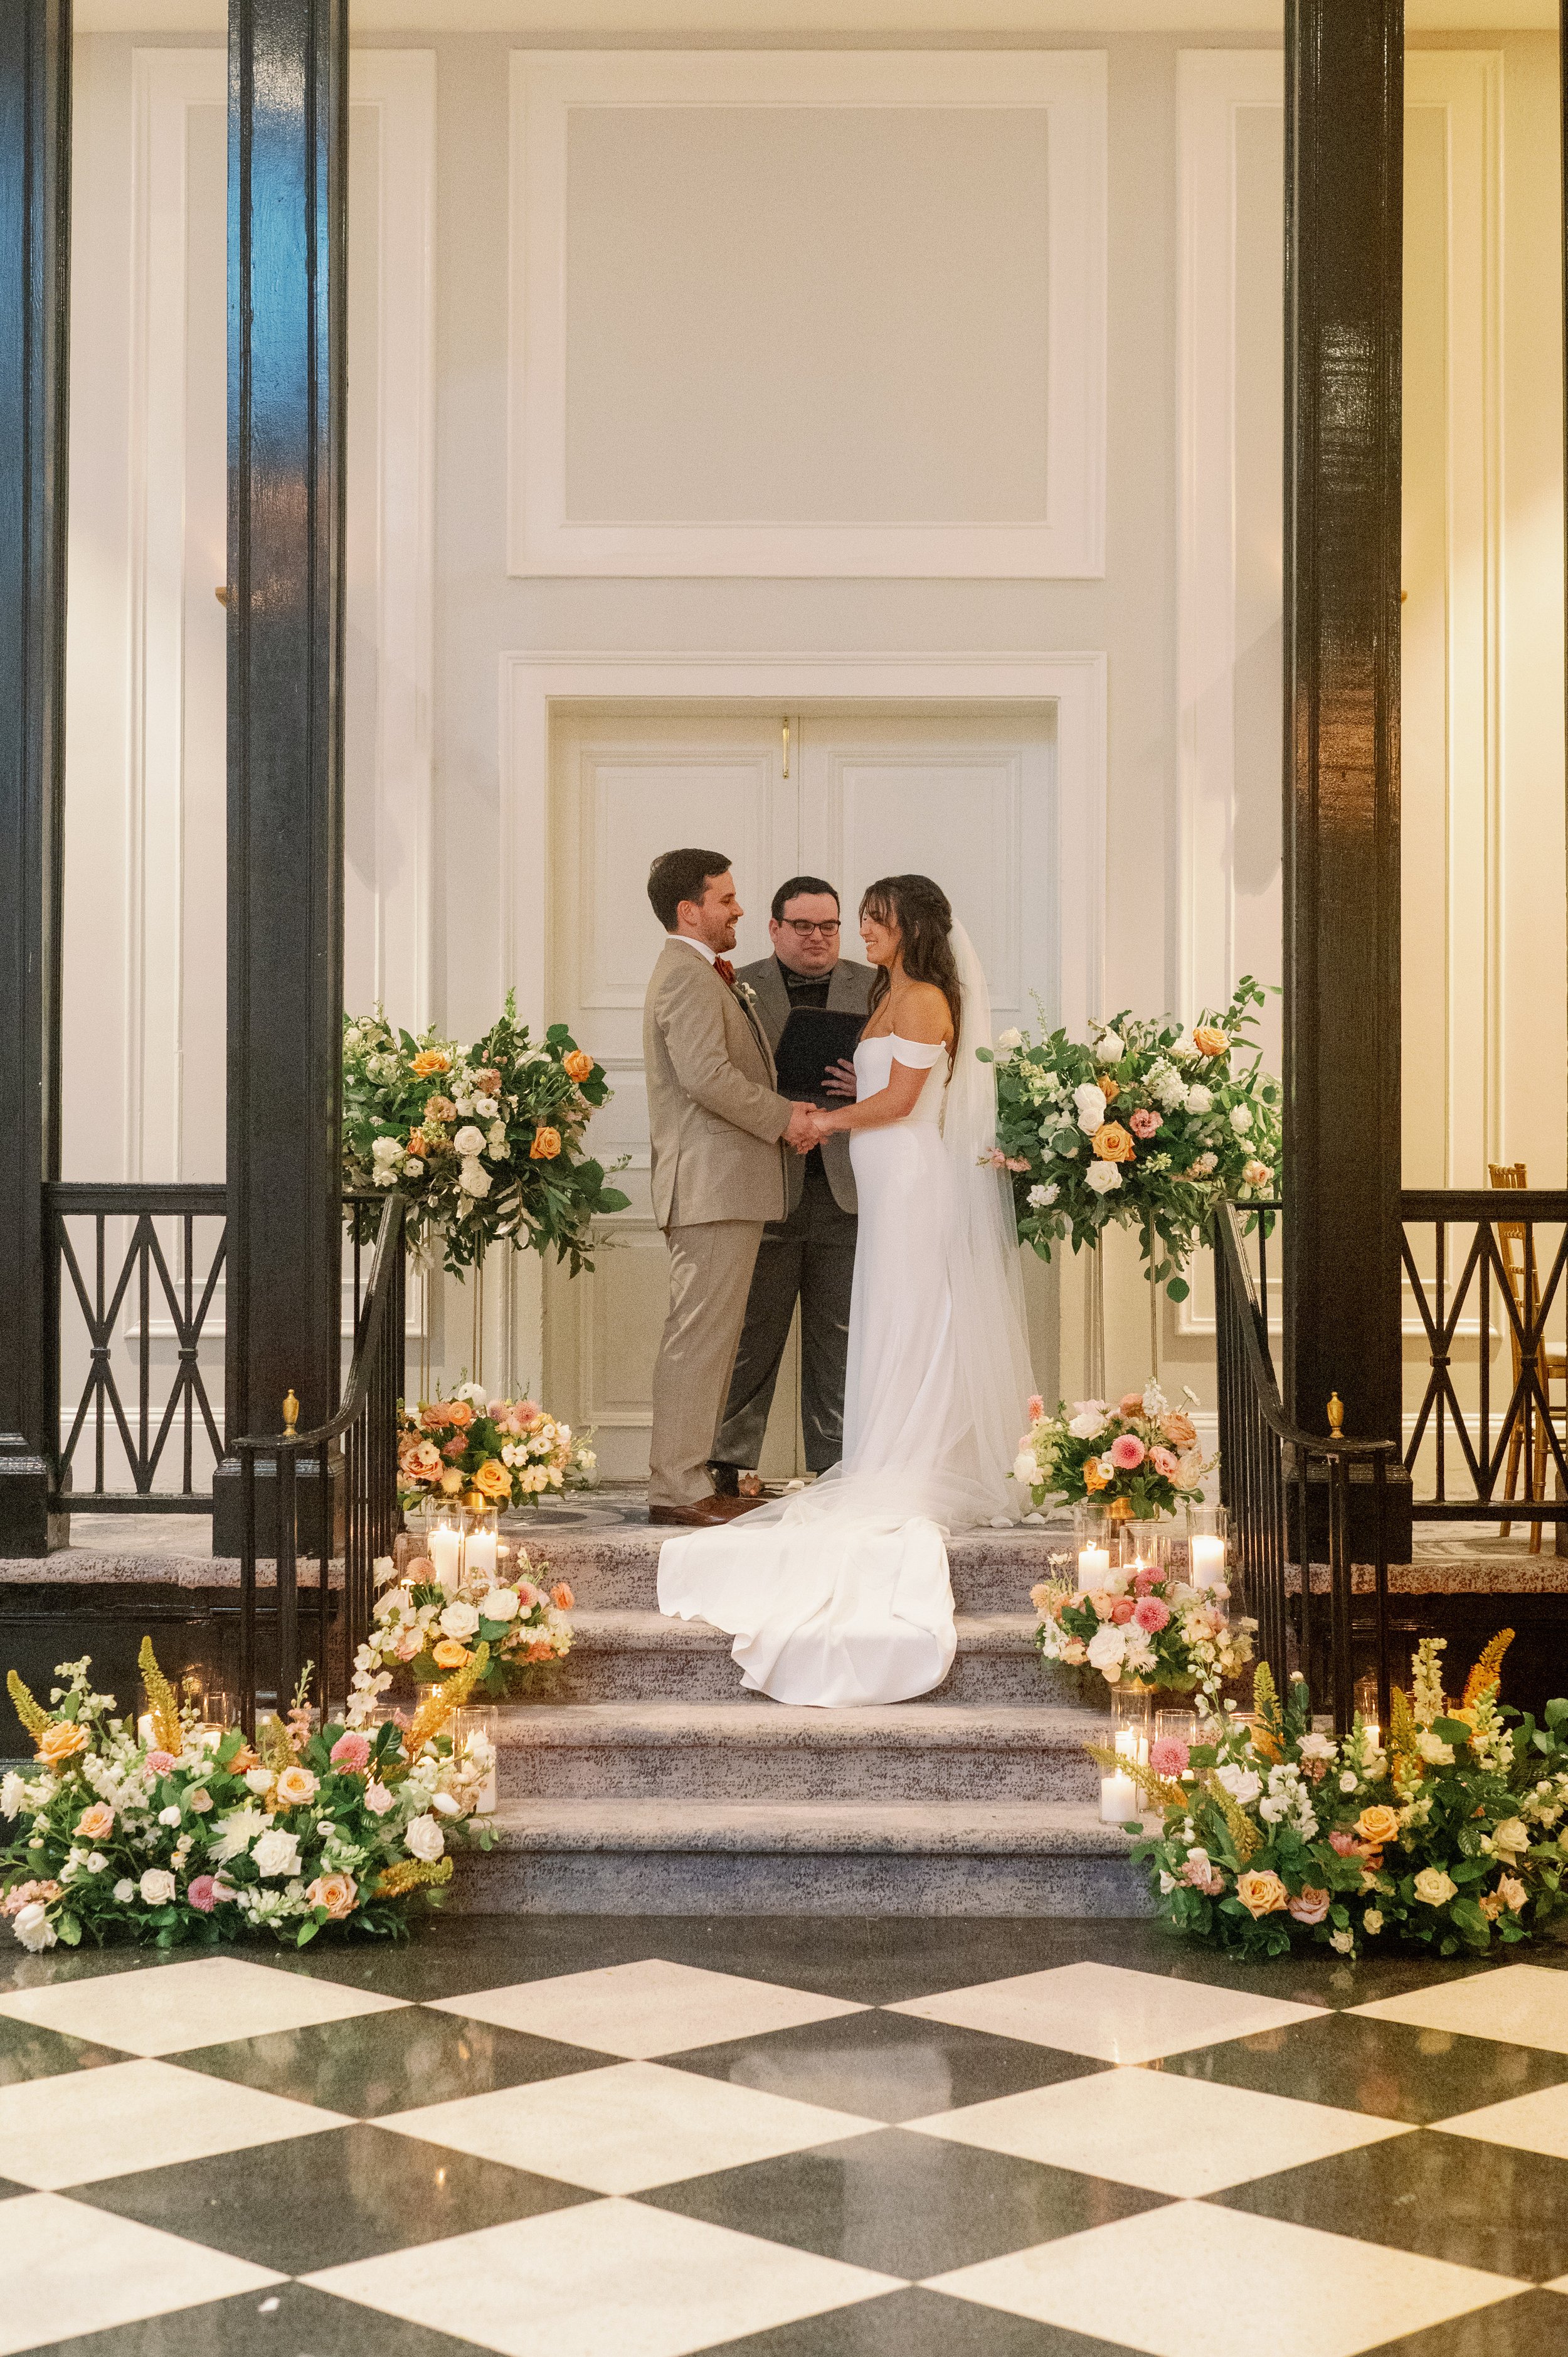 Ceremony Vows Old Well Ballroom Wedding at The Carolina Inn North Carolina Fancy This Photography